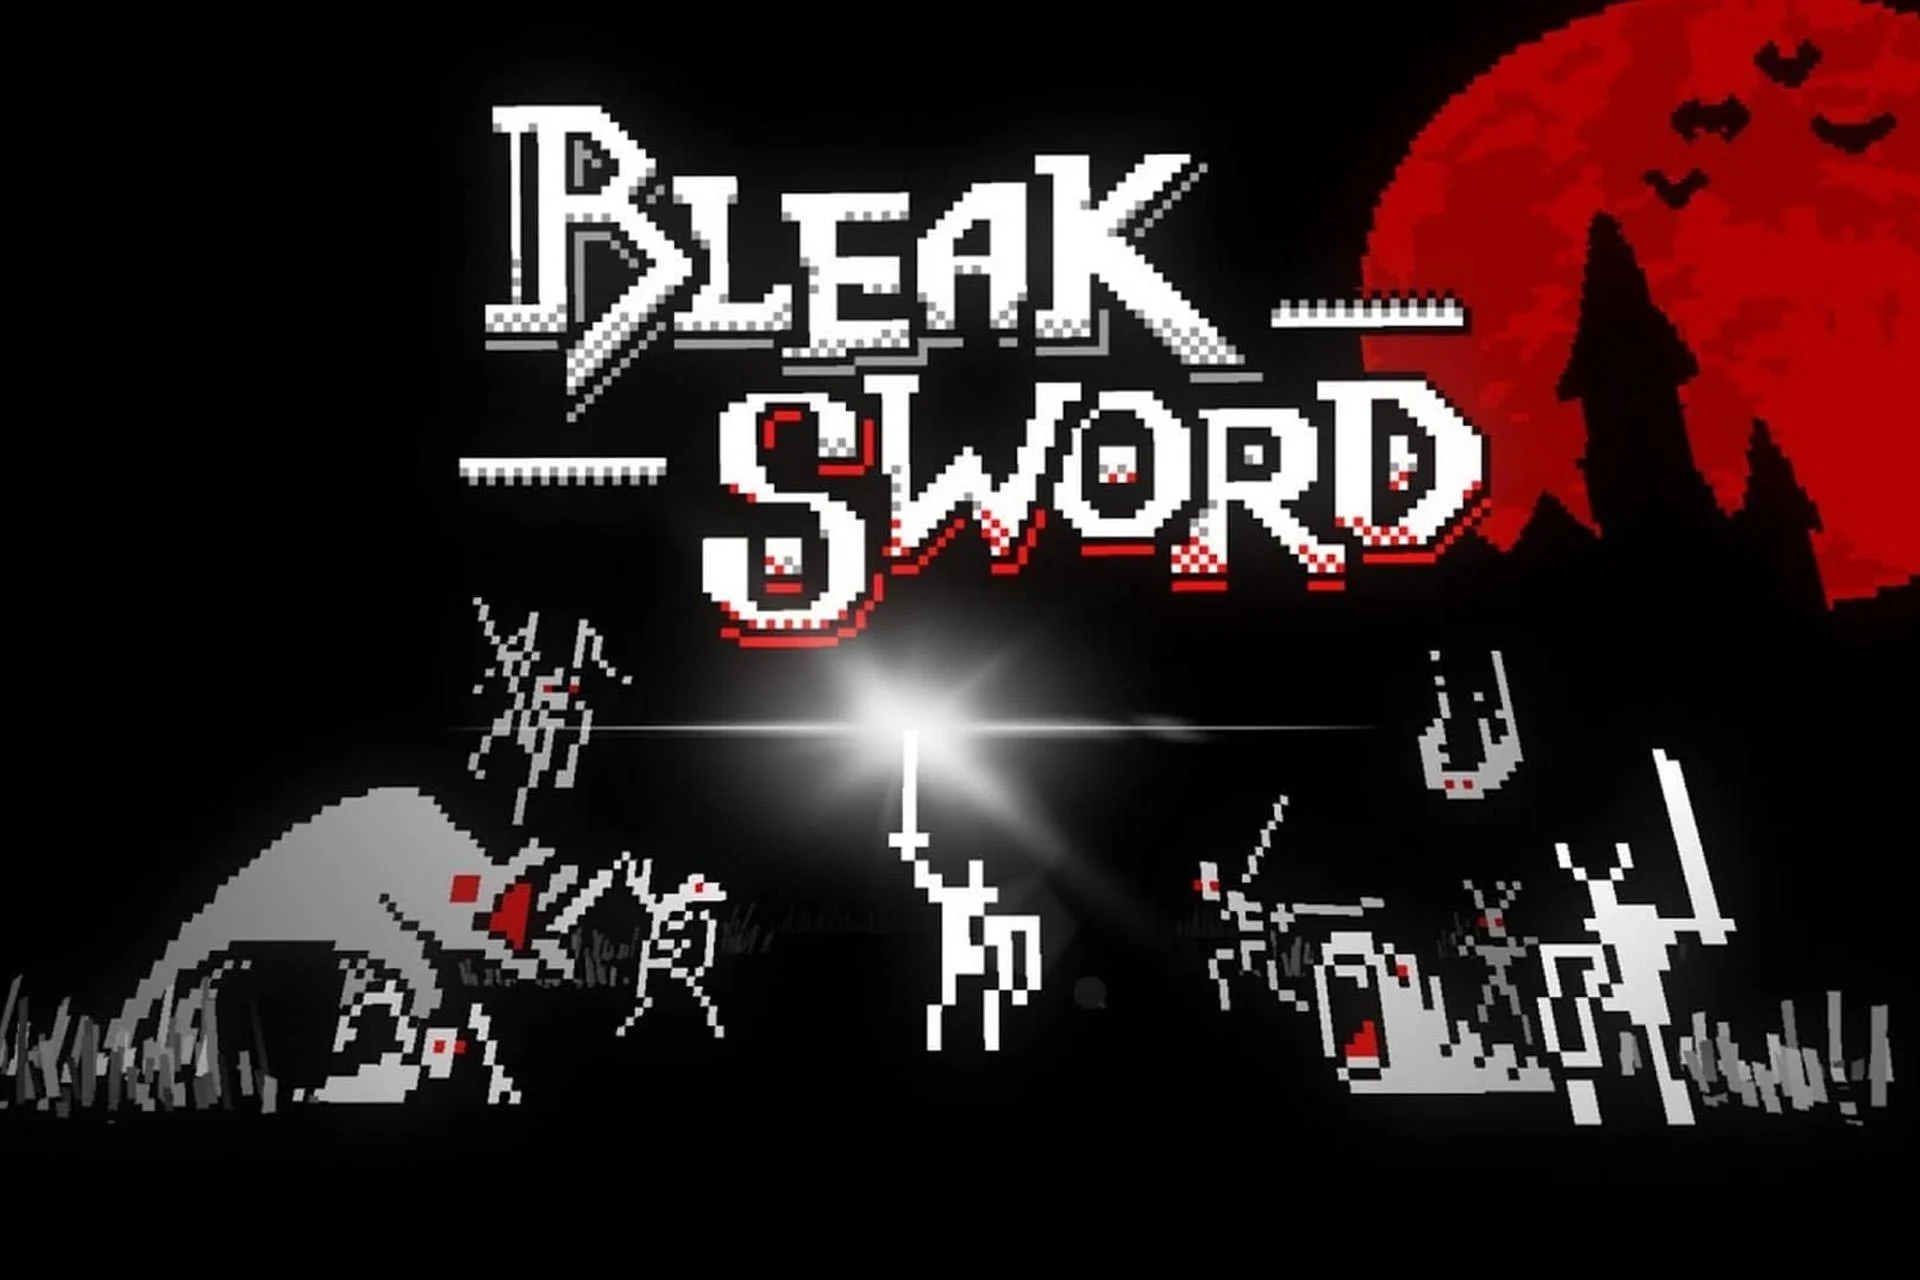 بازی bleak sword